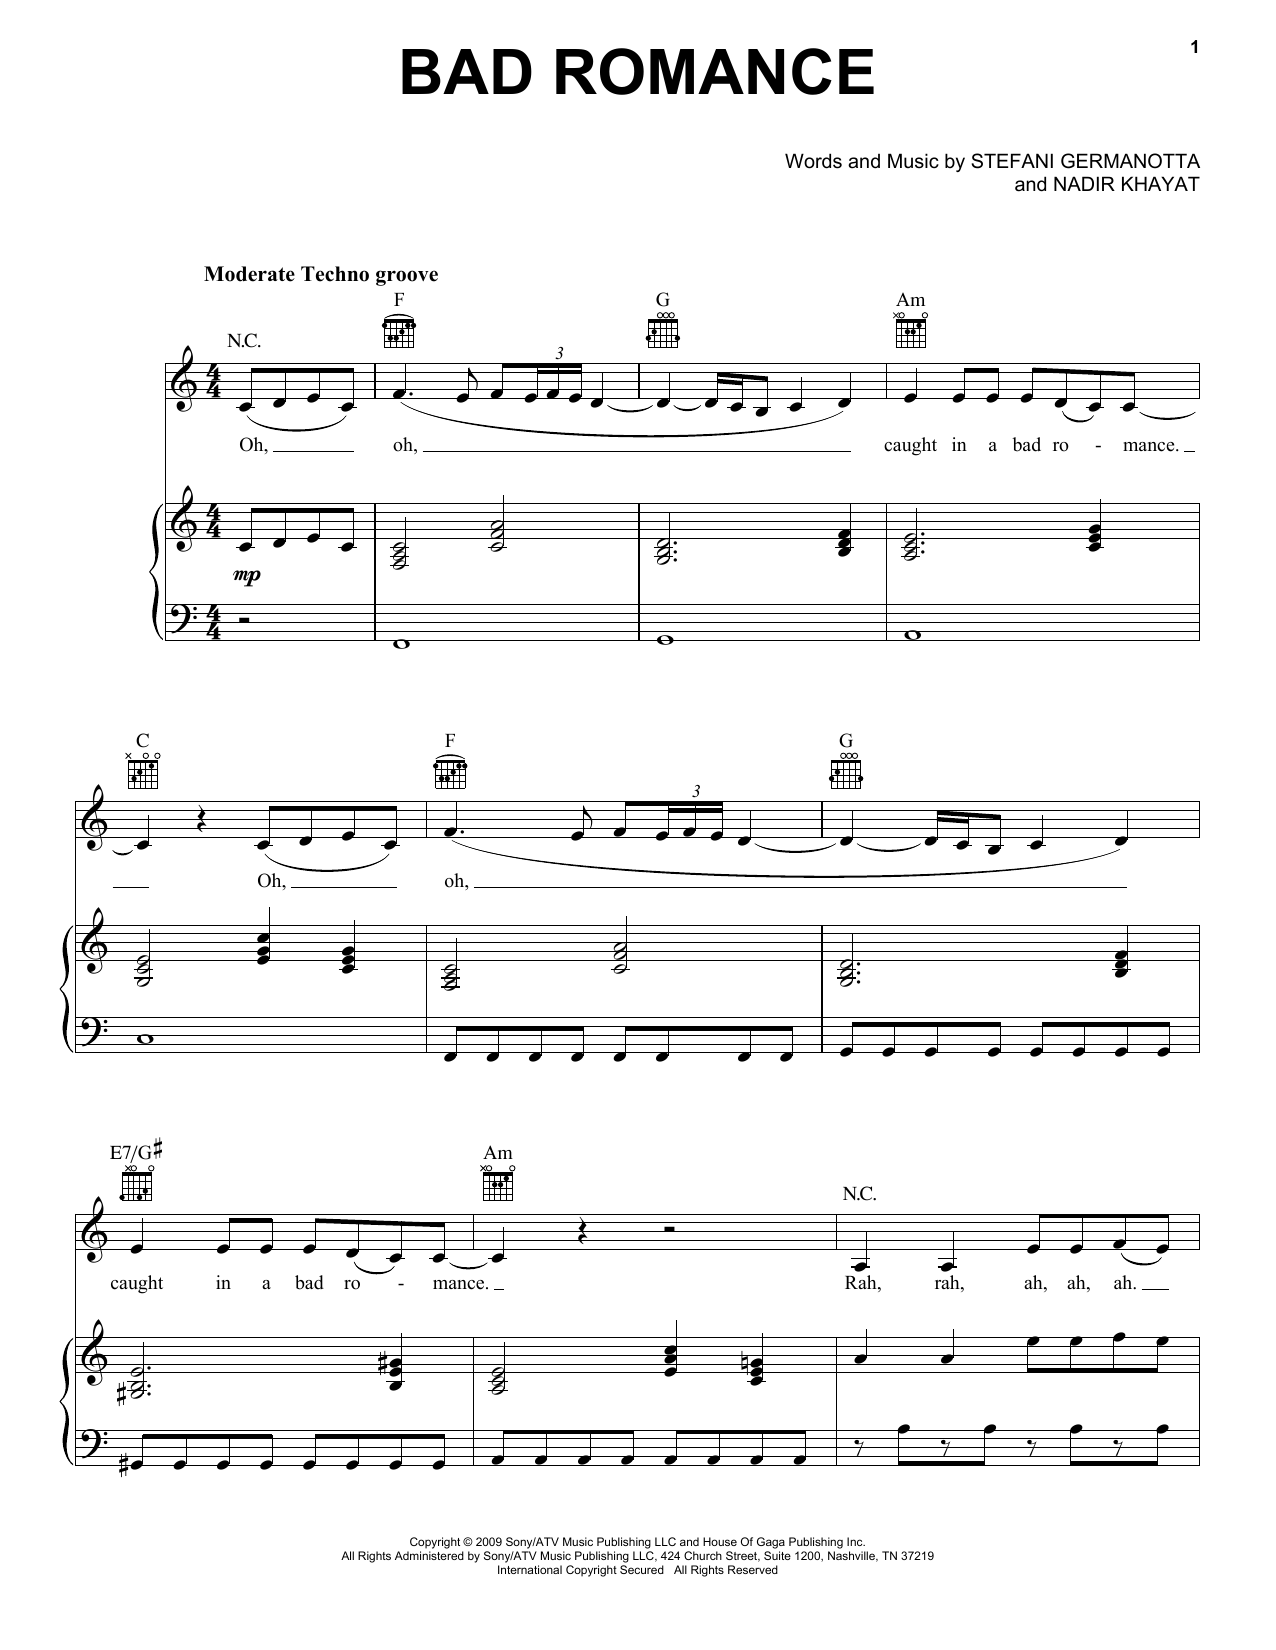 Lady Gaga Bad Romance Sheet Music Notes & Chords for Tenor Saxophone - Download or Print PDF